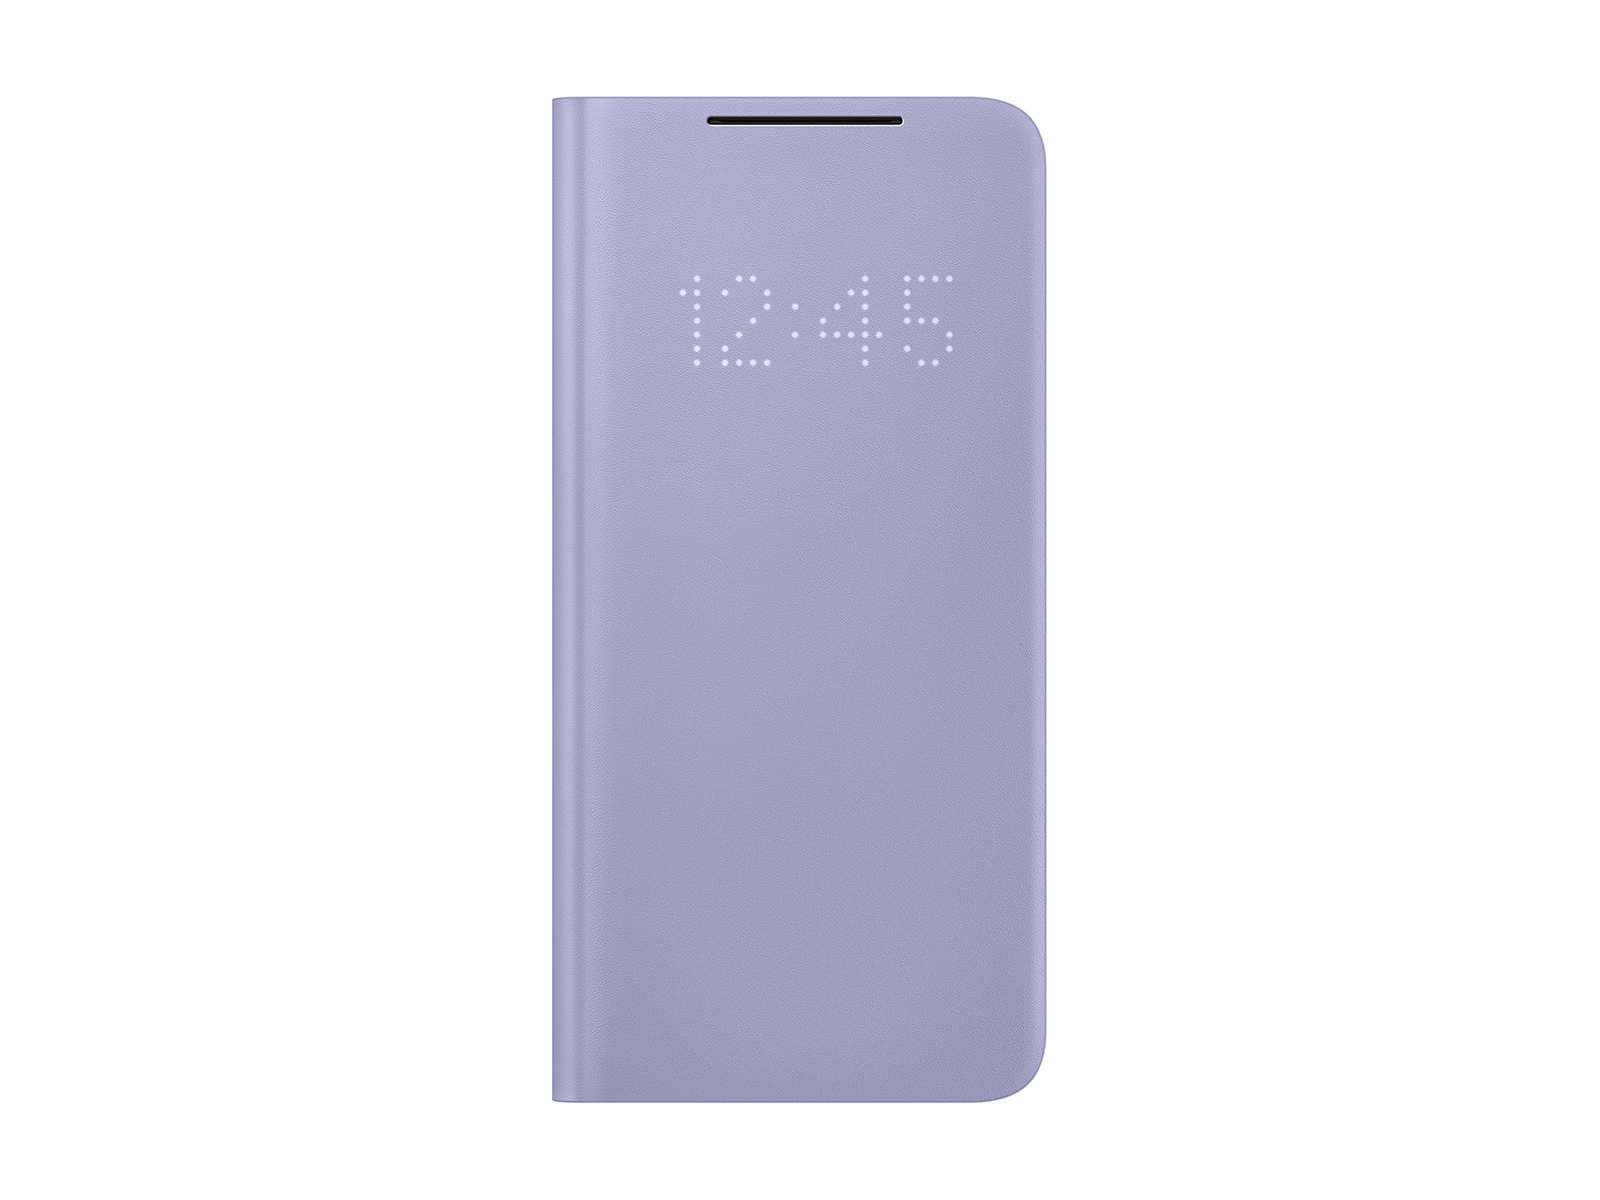 Official Samsung Smart View Violet Wallet Case - For Samsung